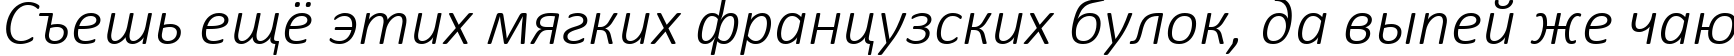 Пример написания шрифтом Calibri Light Italic текста на русском